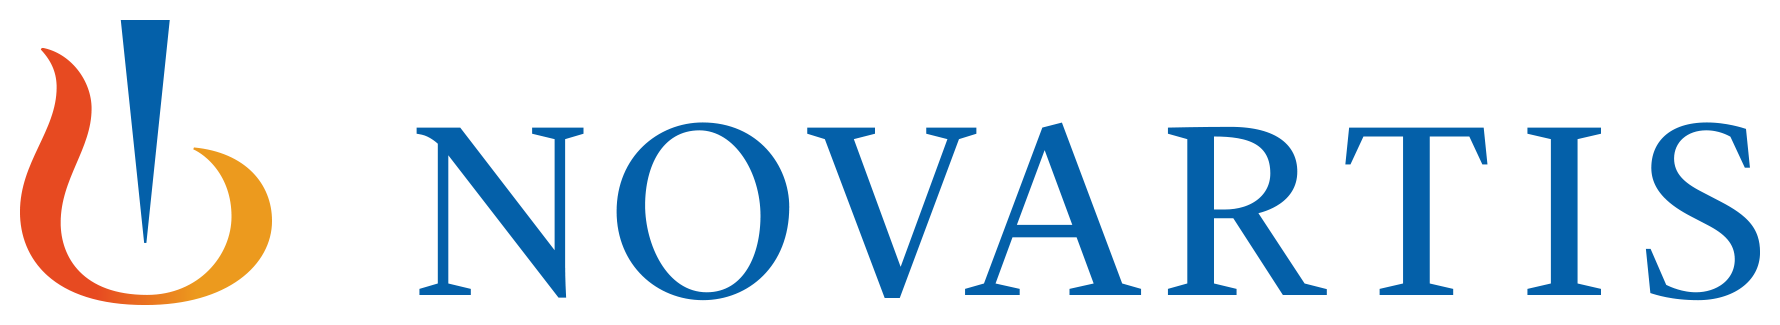 Novartis CSS3 logo